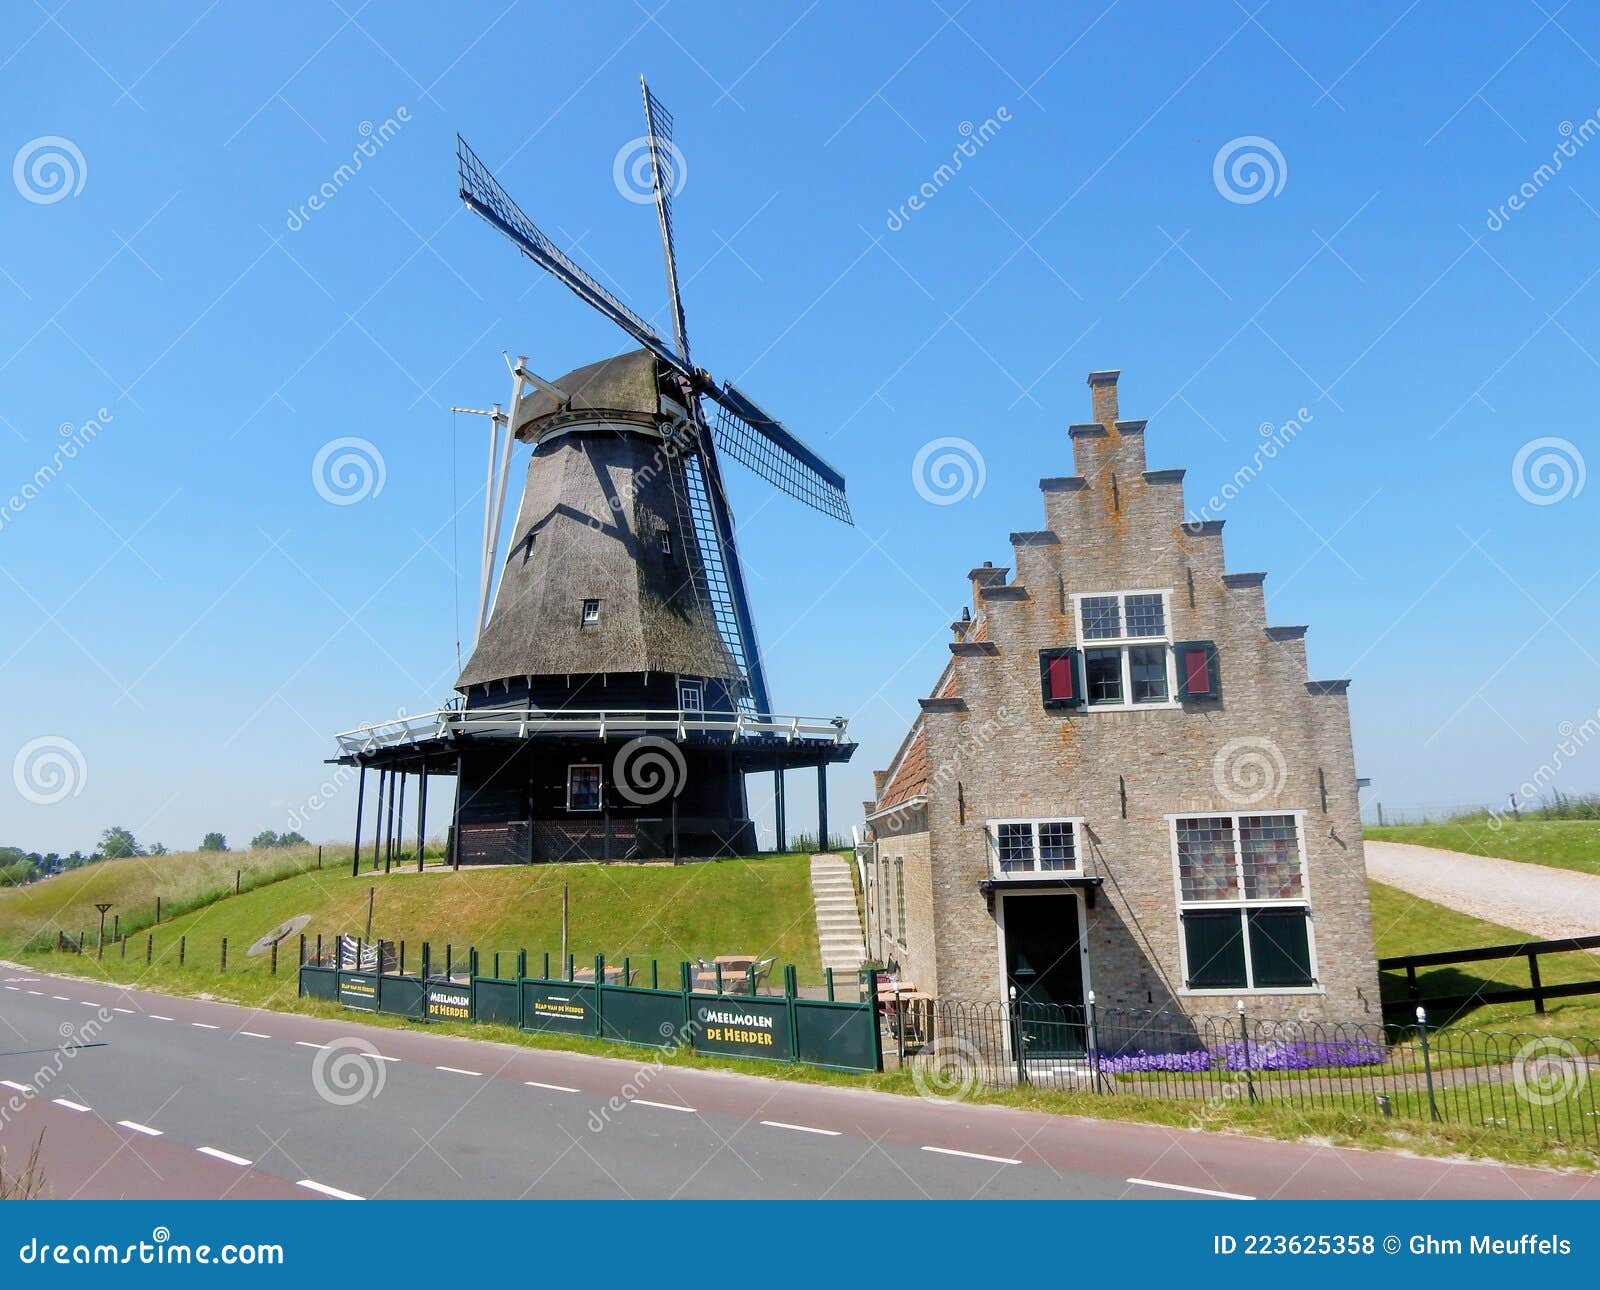 nikkel Luxe Geld rubber Molen De Herder, Dutch Windmill the Shepherd, Tower Mill Located in  Medemblik, North Holland, Netherlands Stock Photo - Image of thatched,  shepherd: 223625358